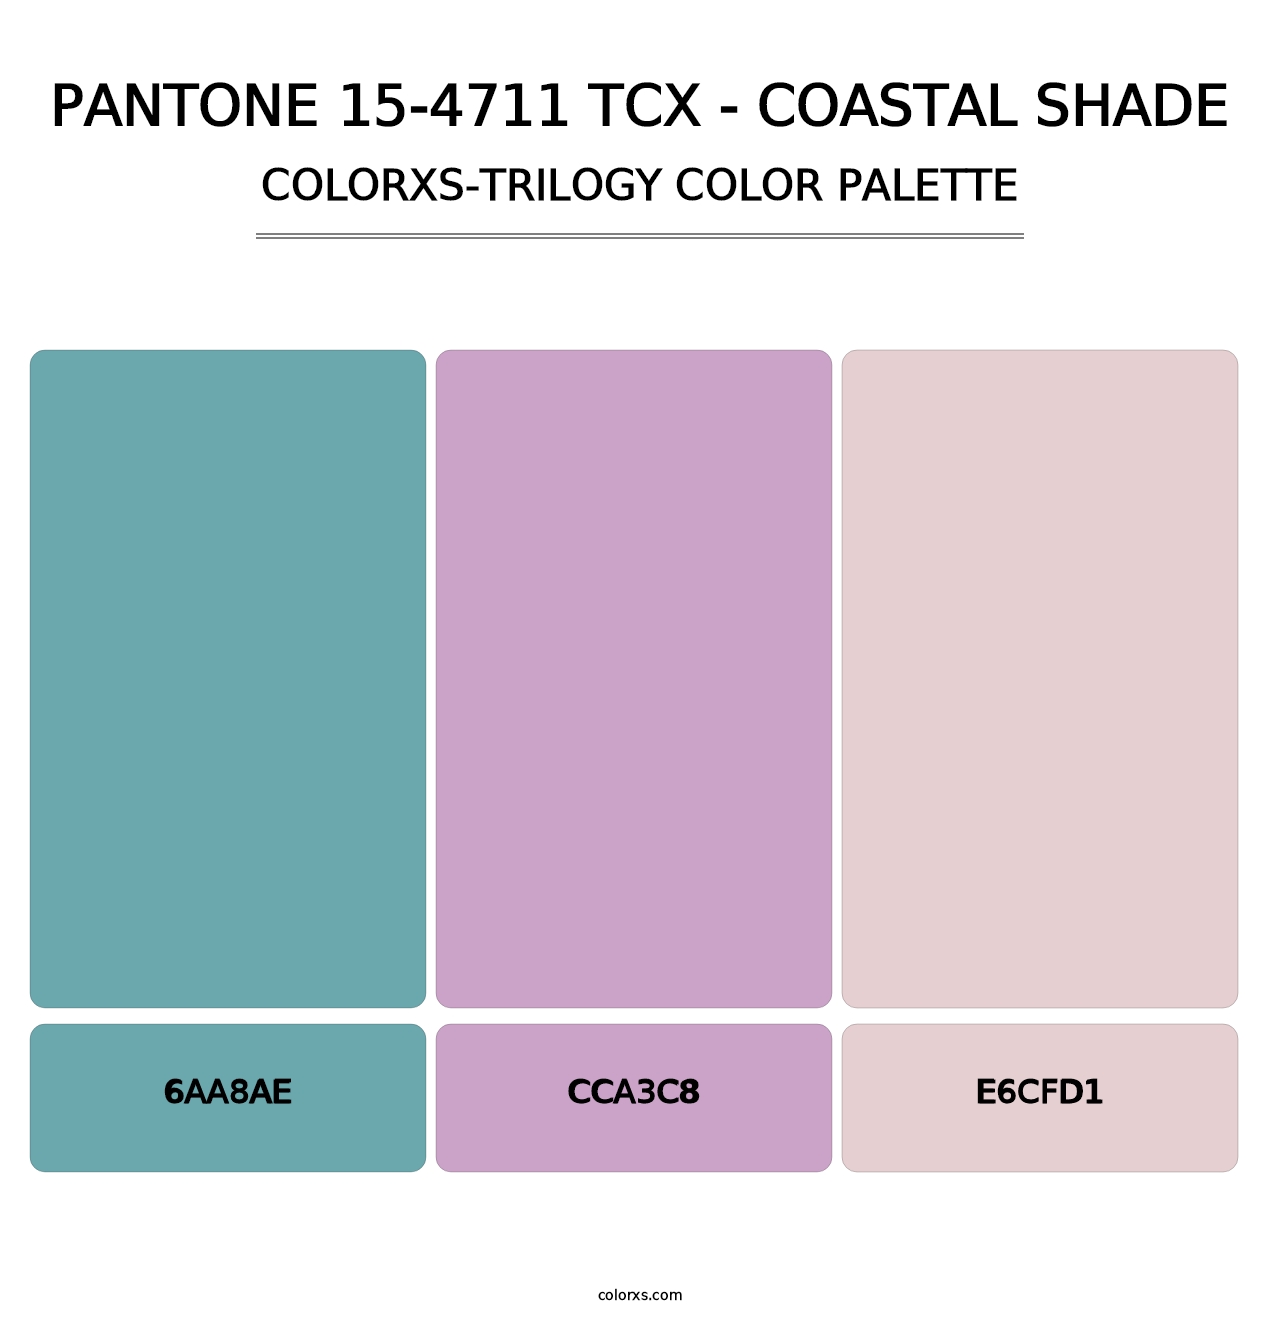 PANTONE 15-4711 TCX - Coastal Shade - Colorxs Trilogy Palette